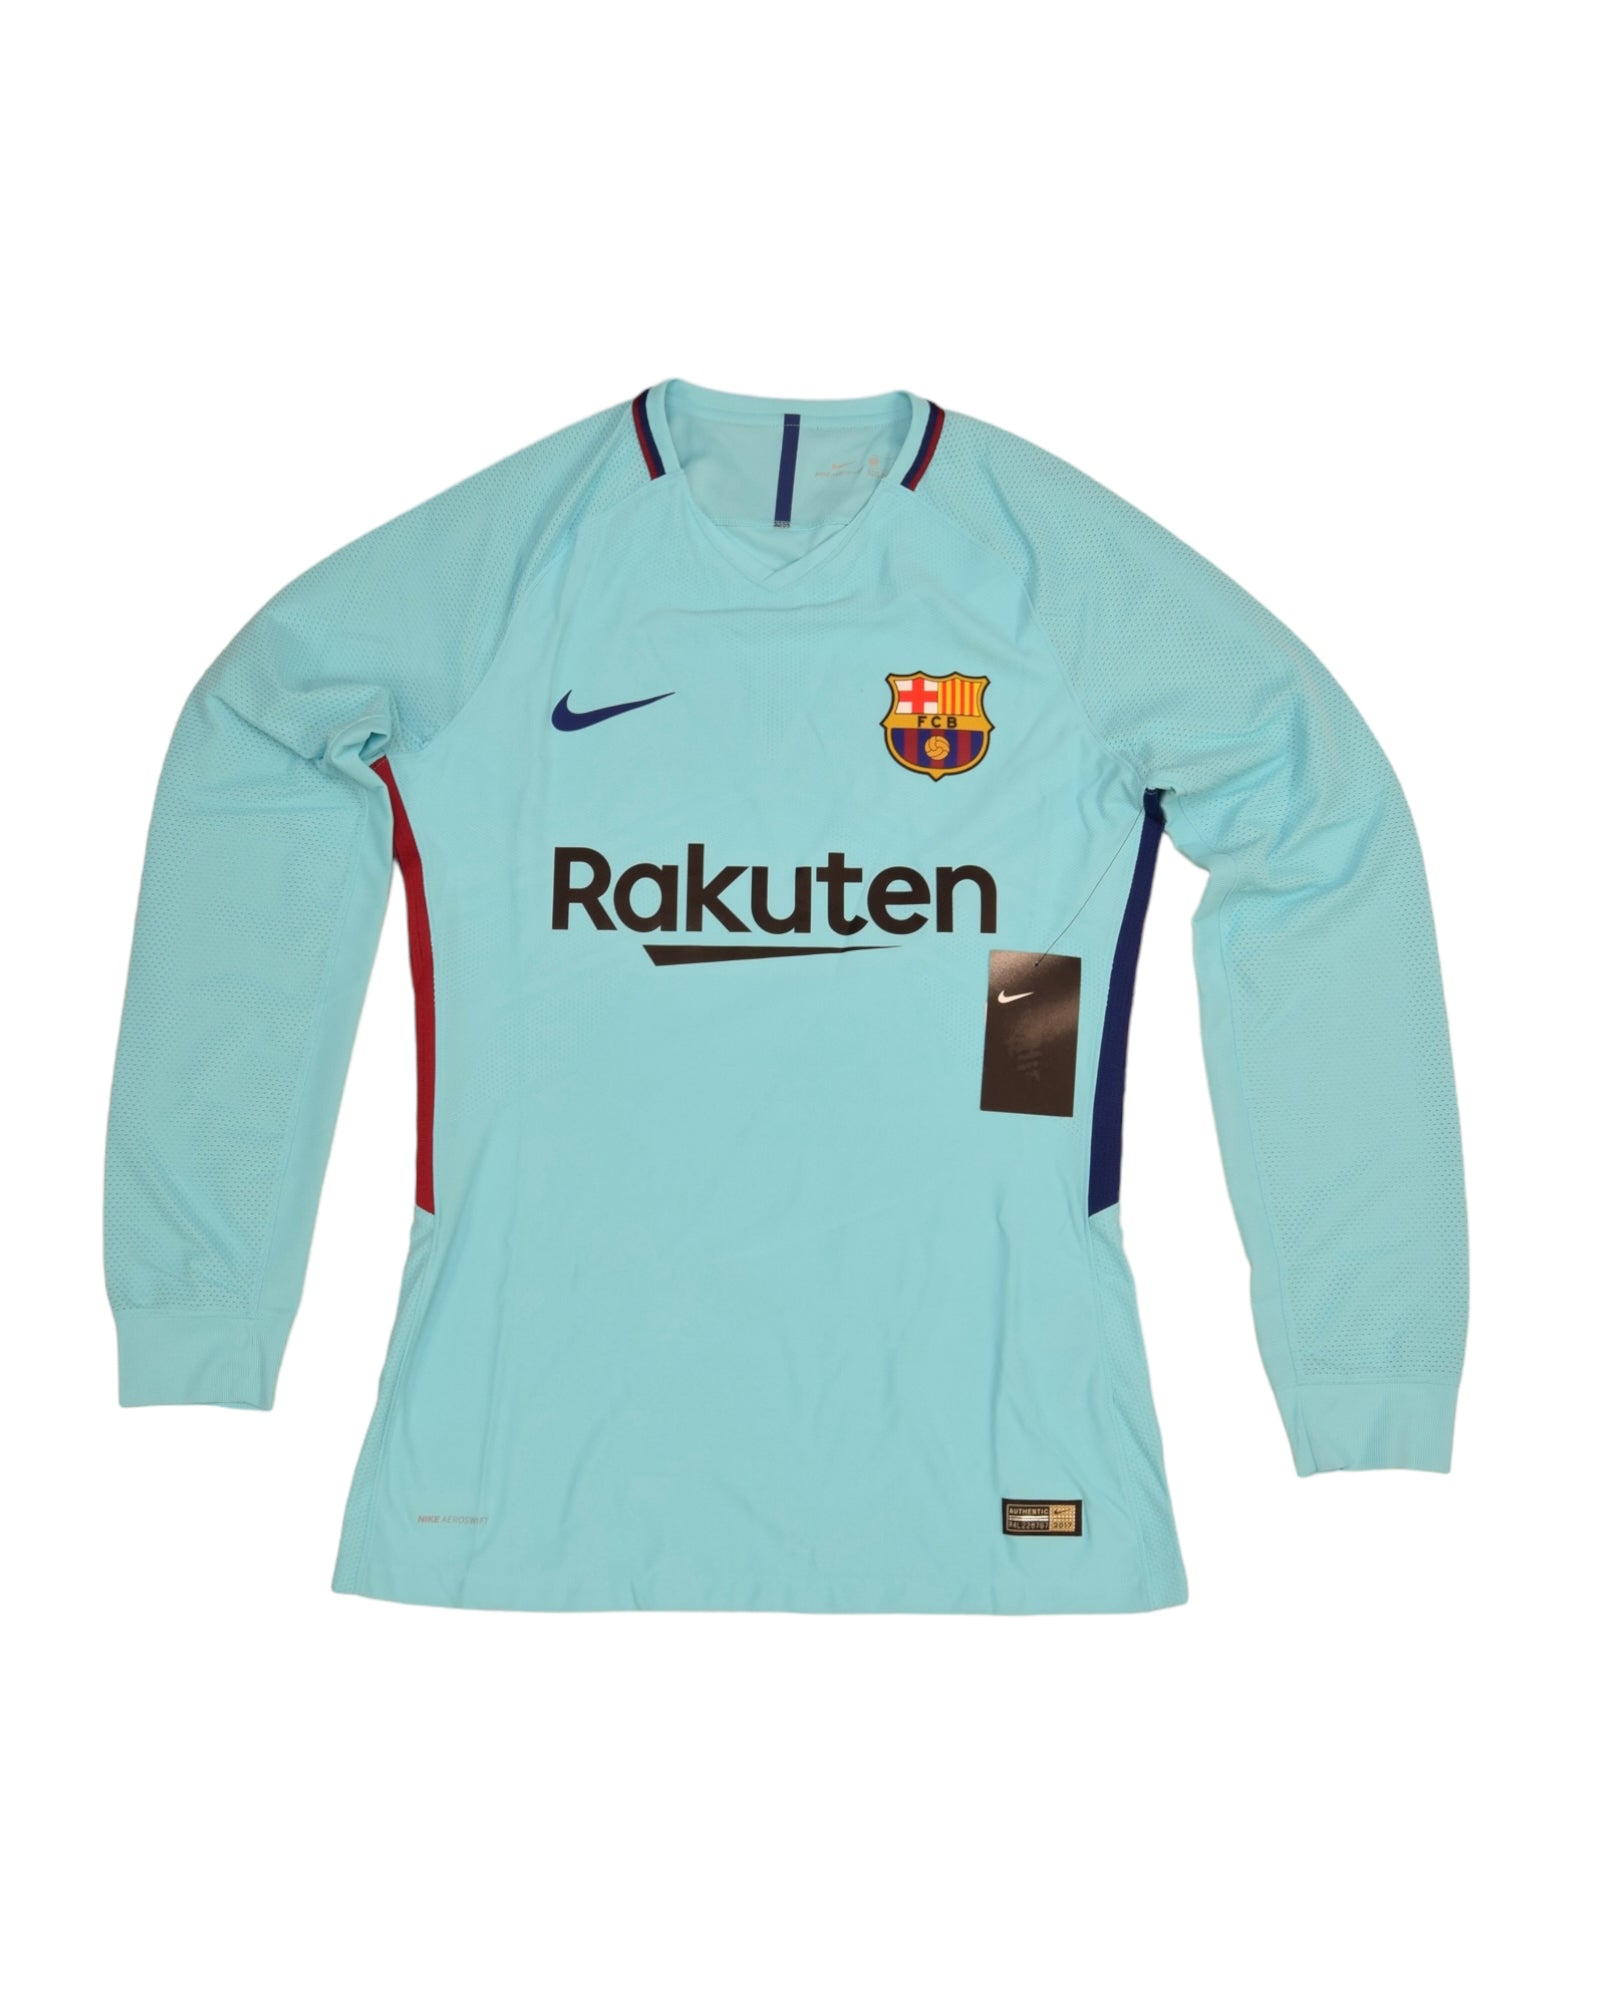 Authentic New FC Barcelona Nike Aeroswift Player Issue Away Football Shirt 2017-2018 Long Sleeves BNWT Deadstock Size M Vivid Blue Rakuten Unicef